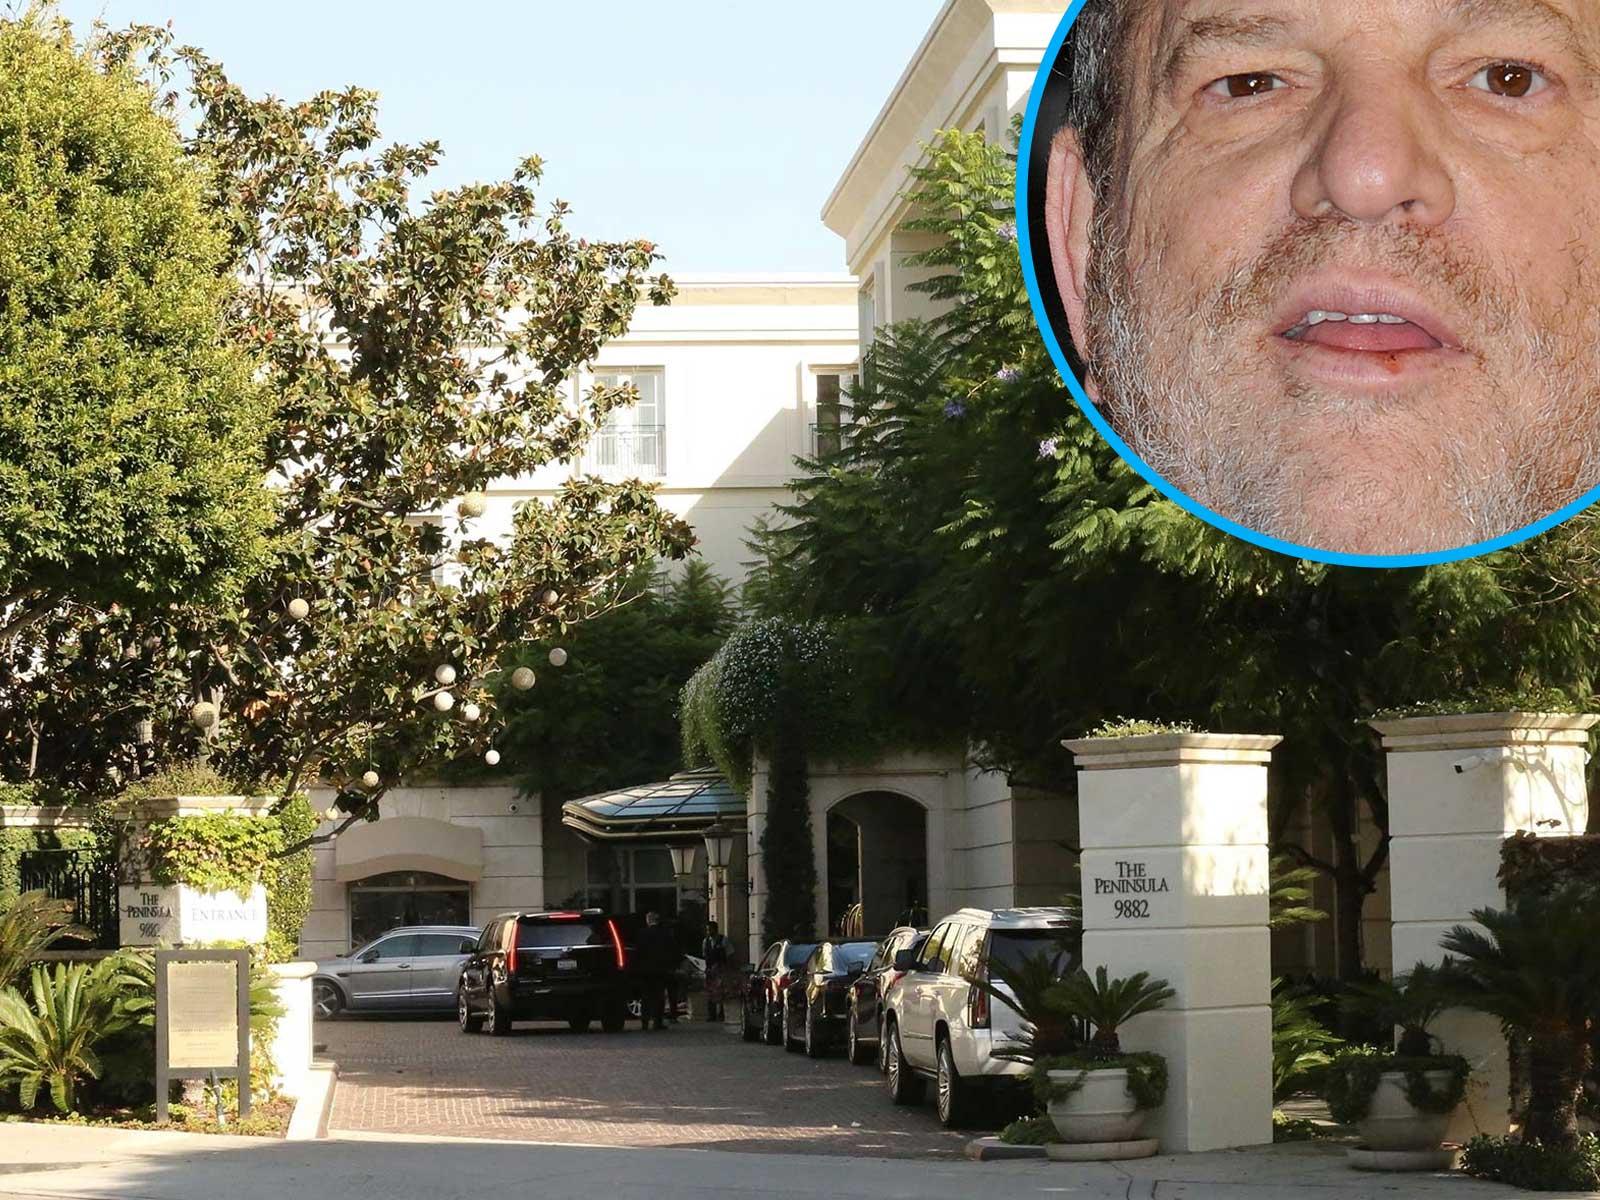 Harvey Weinstein: Peninsula Hotel Says They Won’t Hesitate to ‘Alert Authorities’